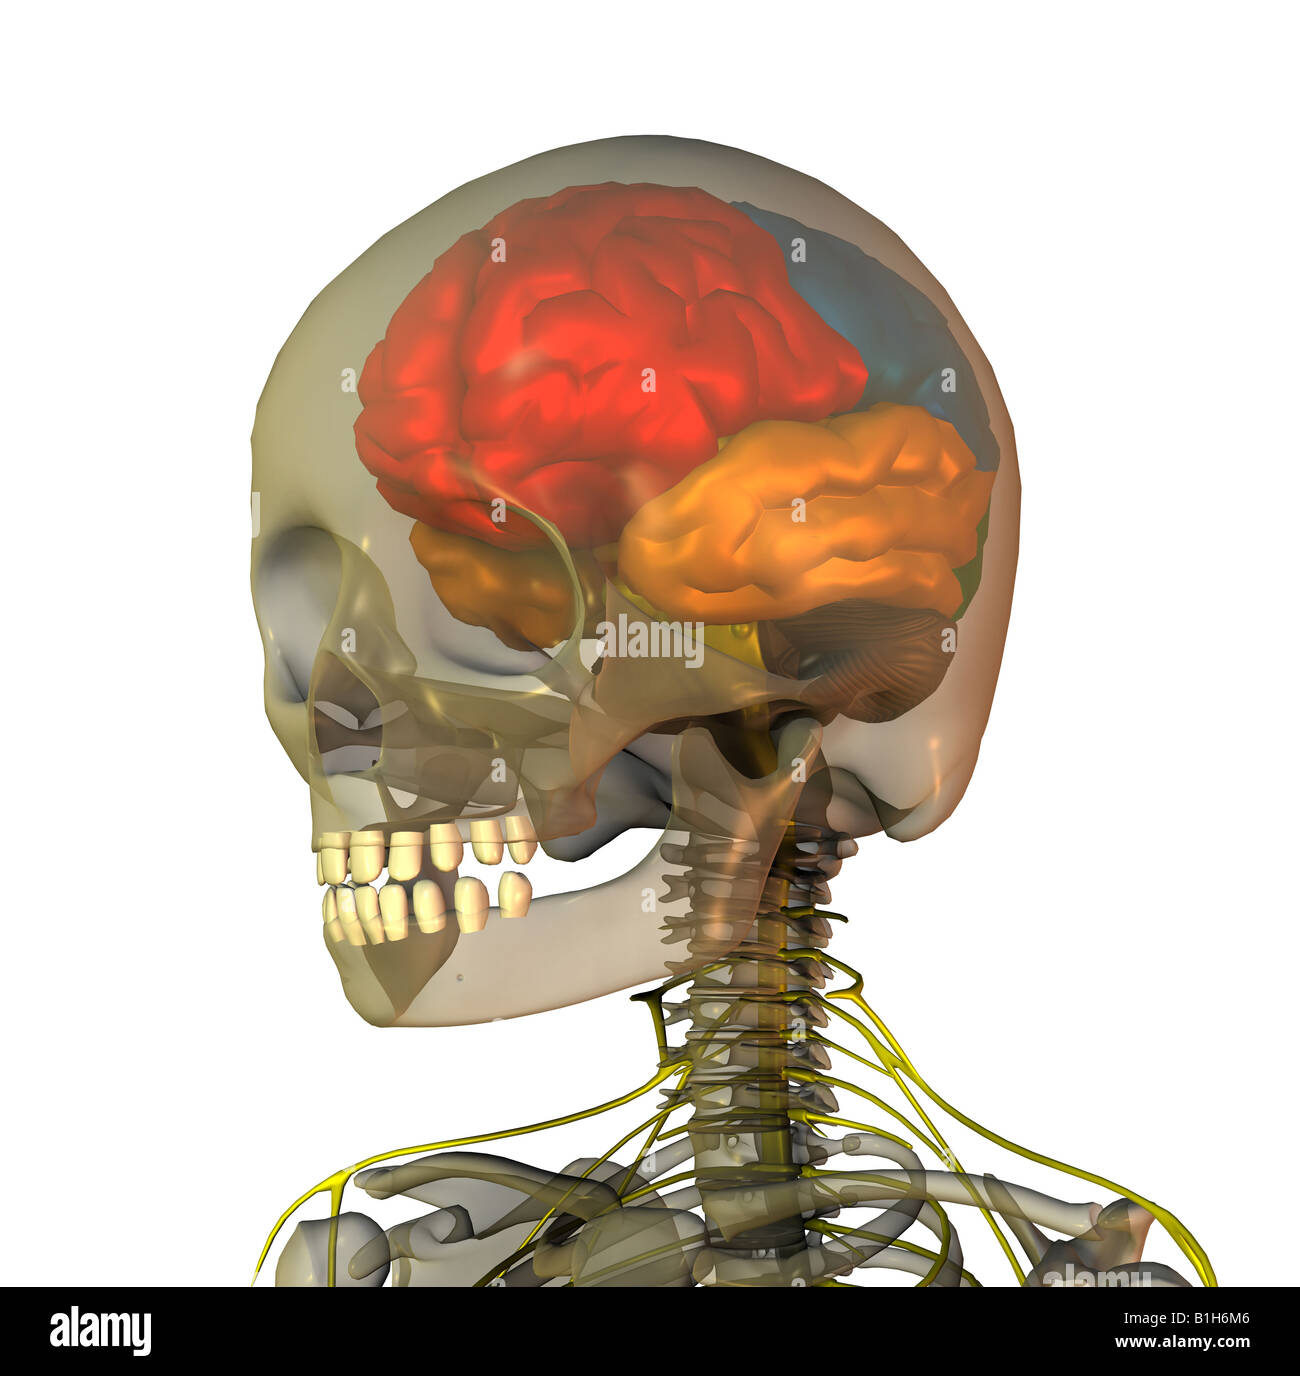 anatomy head brain Stock Photo